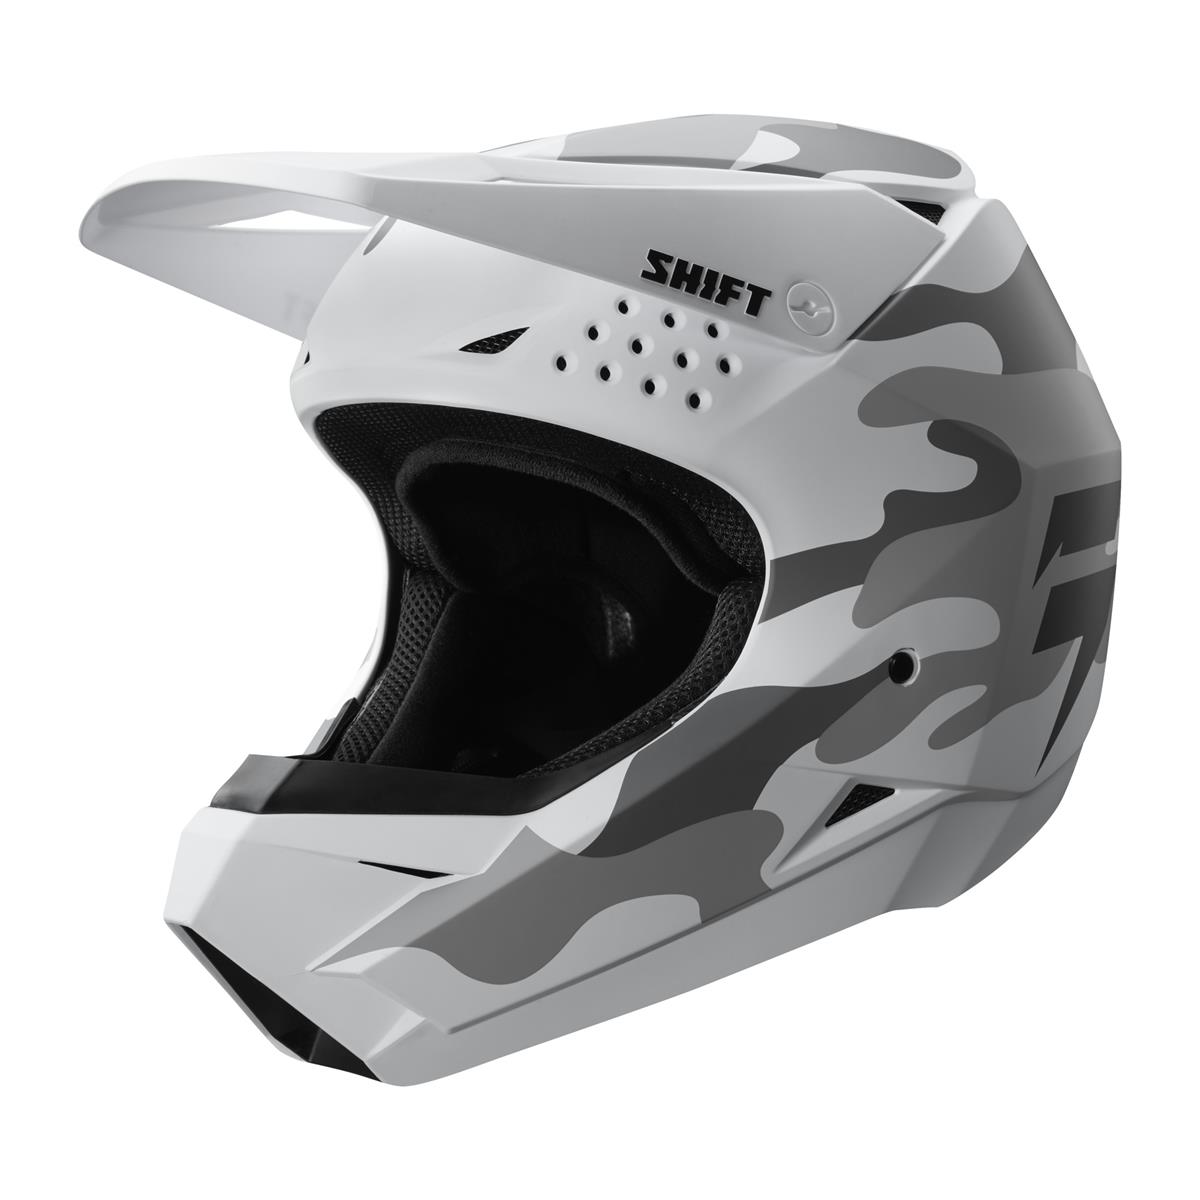 Shift Motocross-Helm Whit3 Label Weiß/Camo